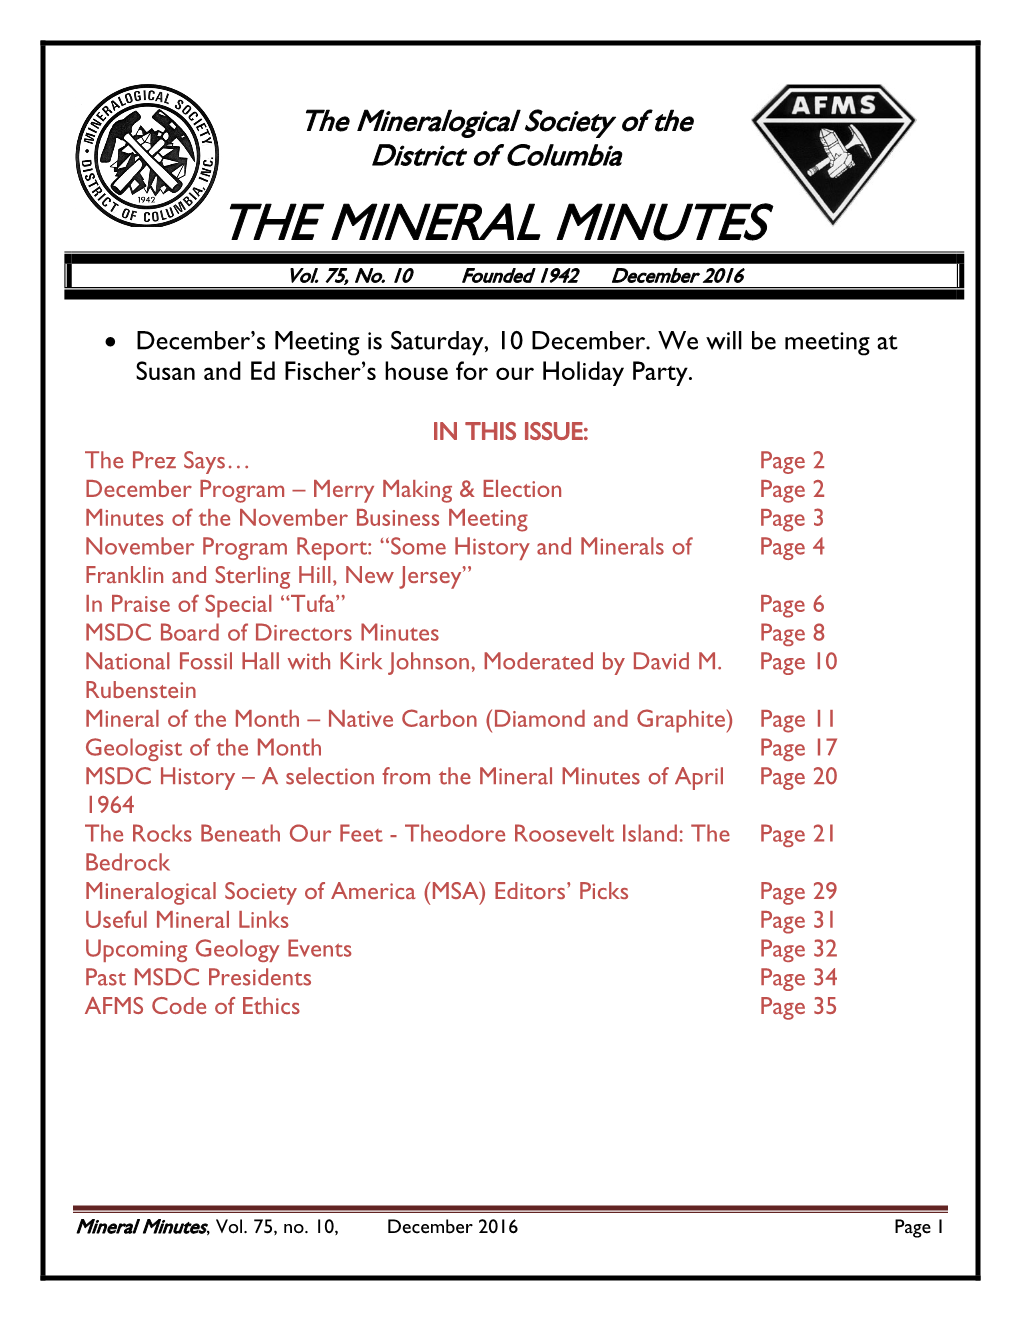 THE MINERAL MINUTES Vol